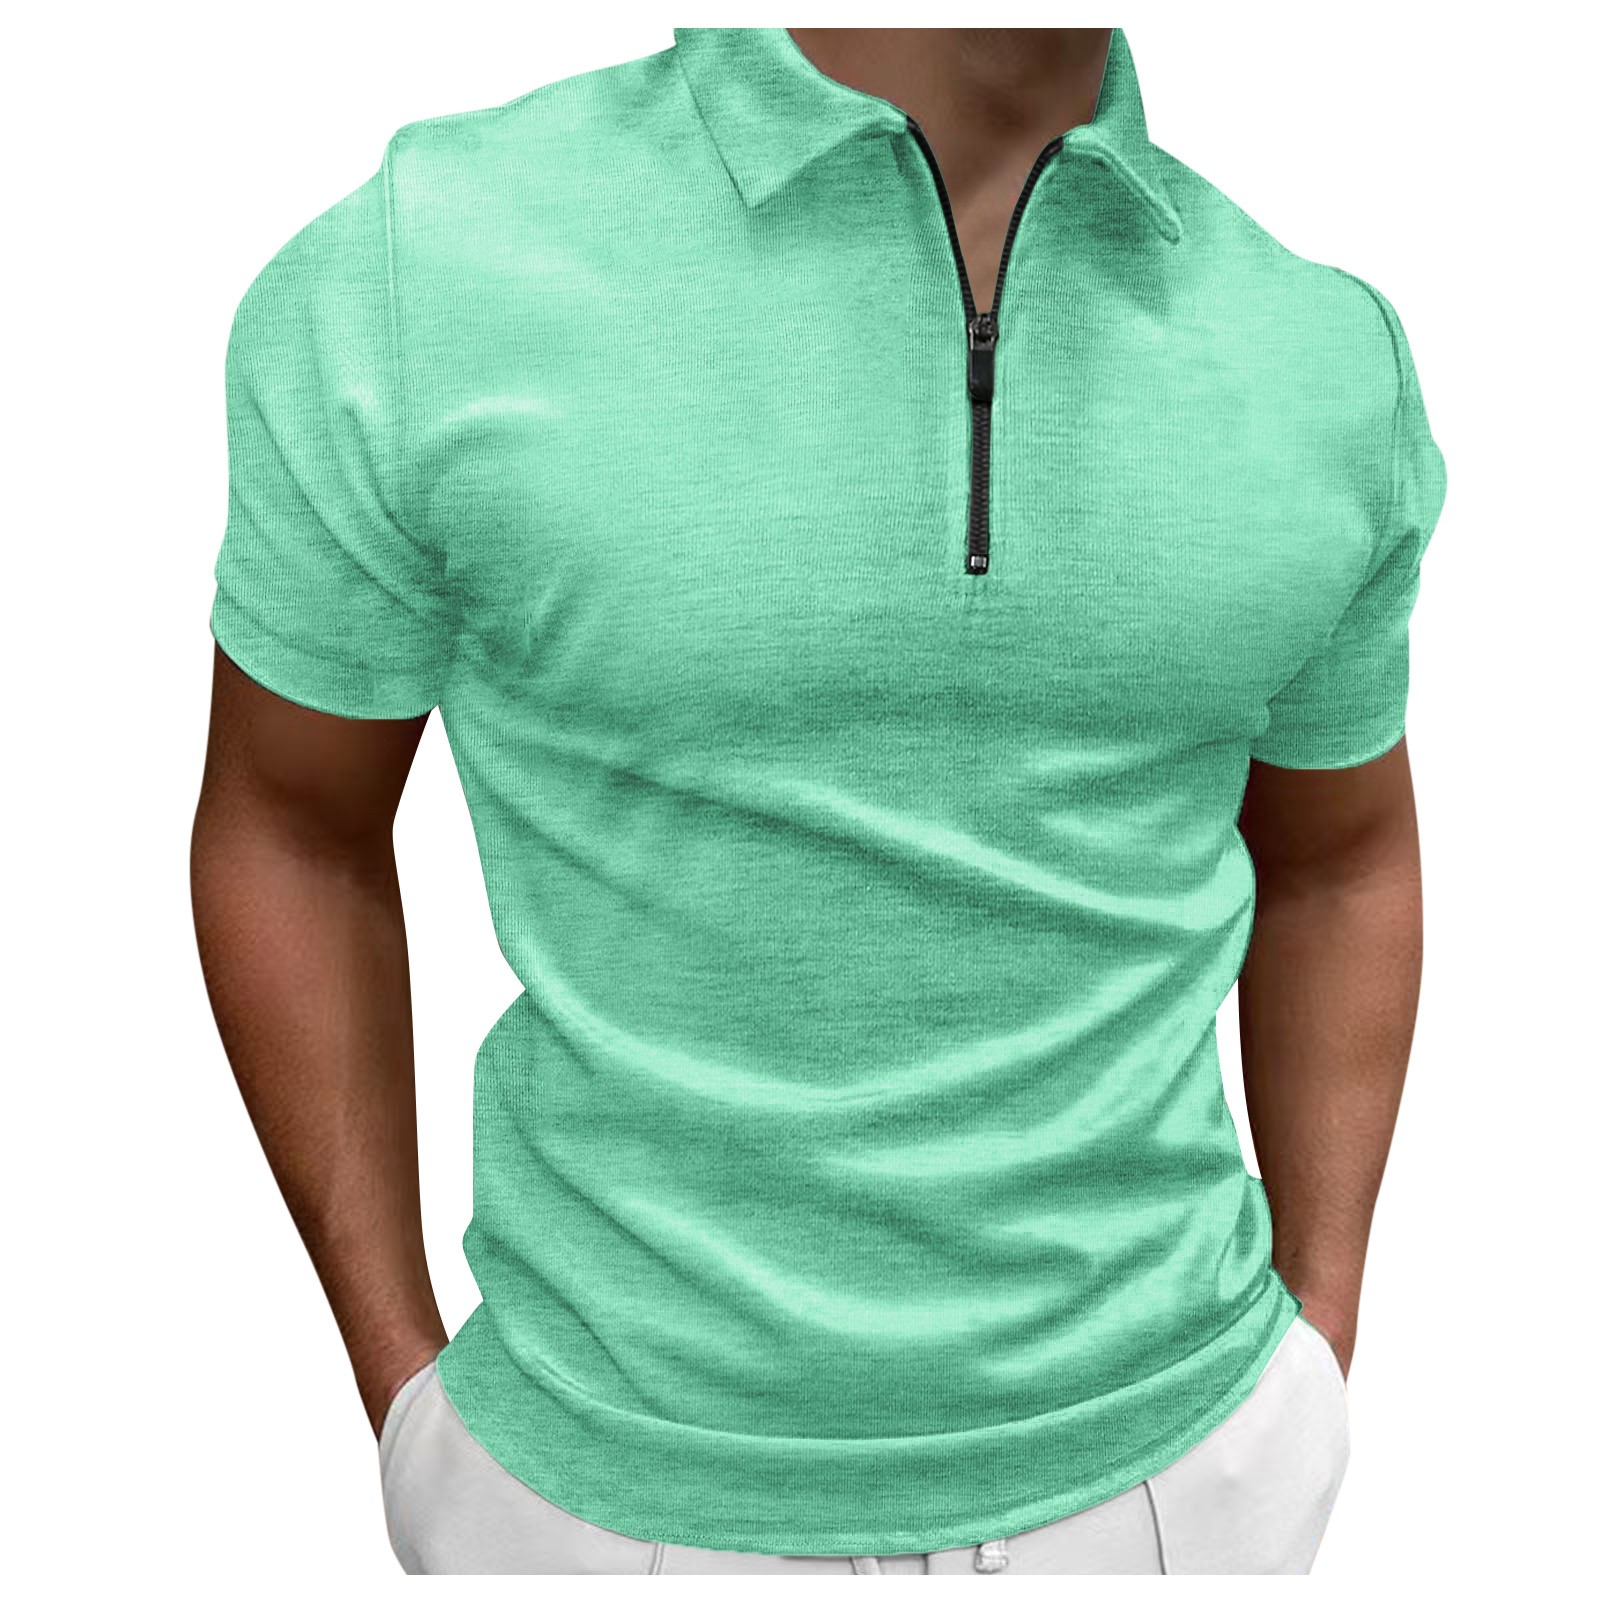 Pedort Shirts For Men Plus Size Mens Polo Shirt Short Sleeve Moisture  Wicking Summer Golf Shirts Casual Collared Tops Green,3XL